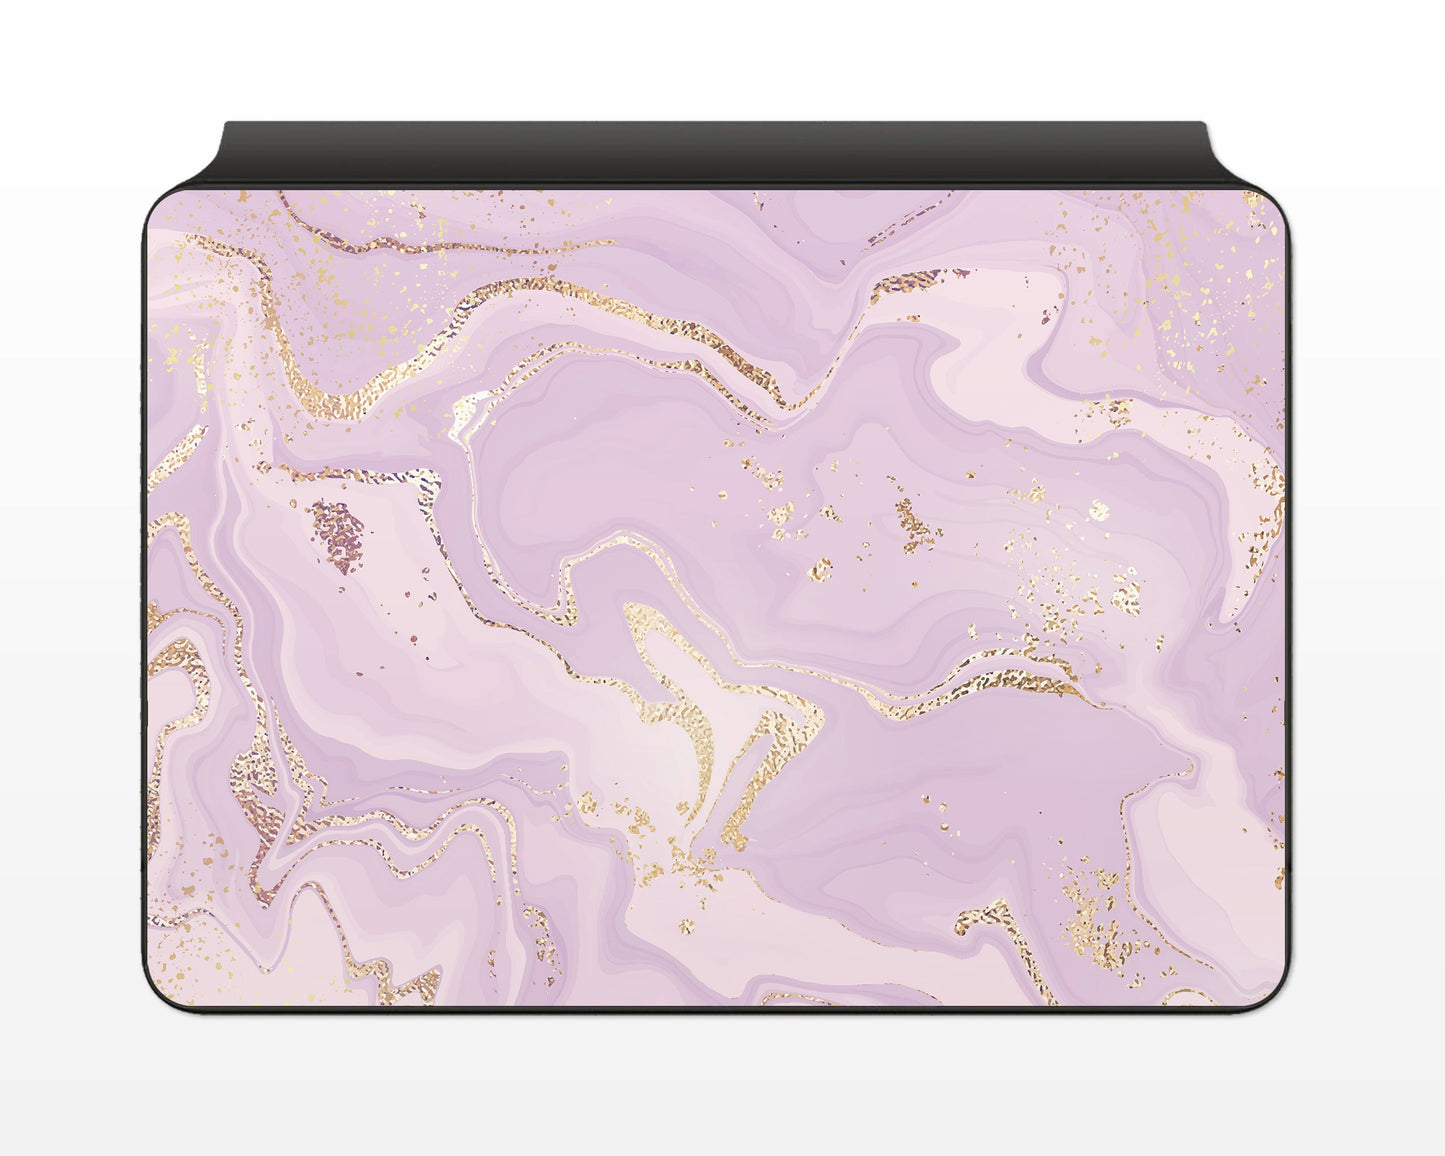 Lux Skins Magic Keyboard Ethereal Lavender Marble iPad Pro 12.9" Skins - Pattern Marble Skin